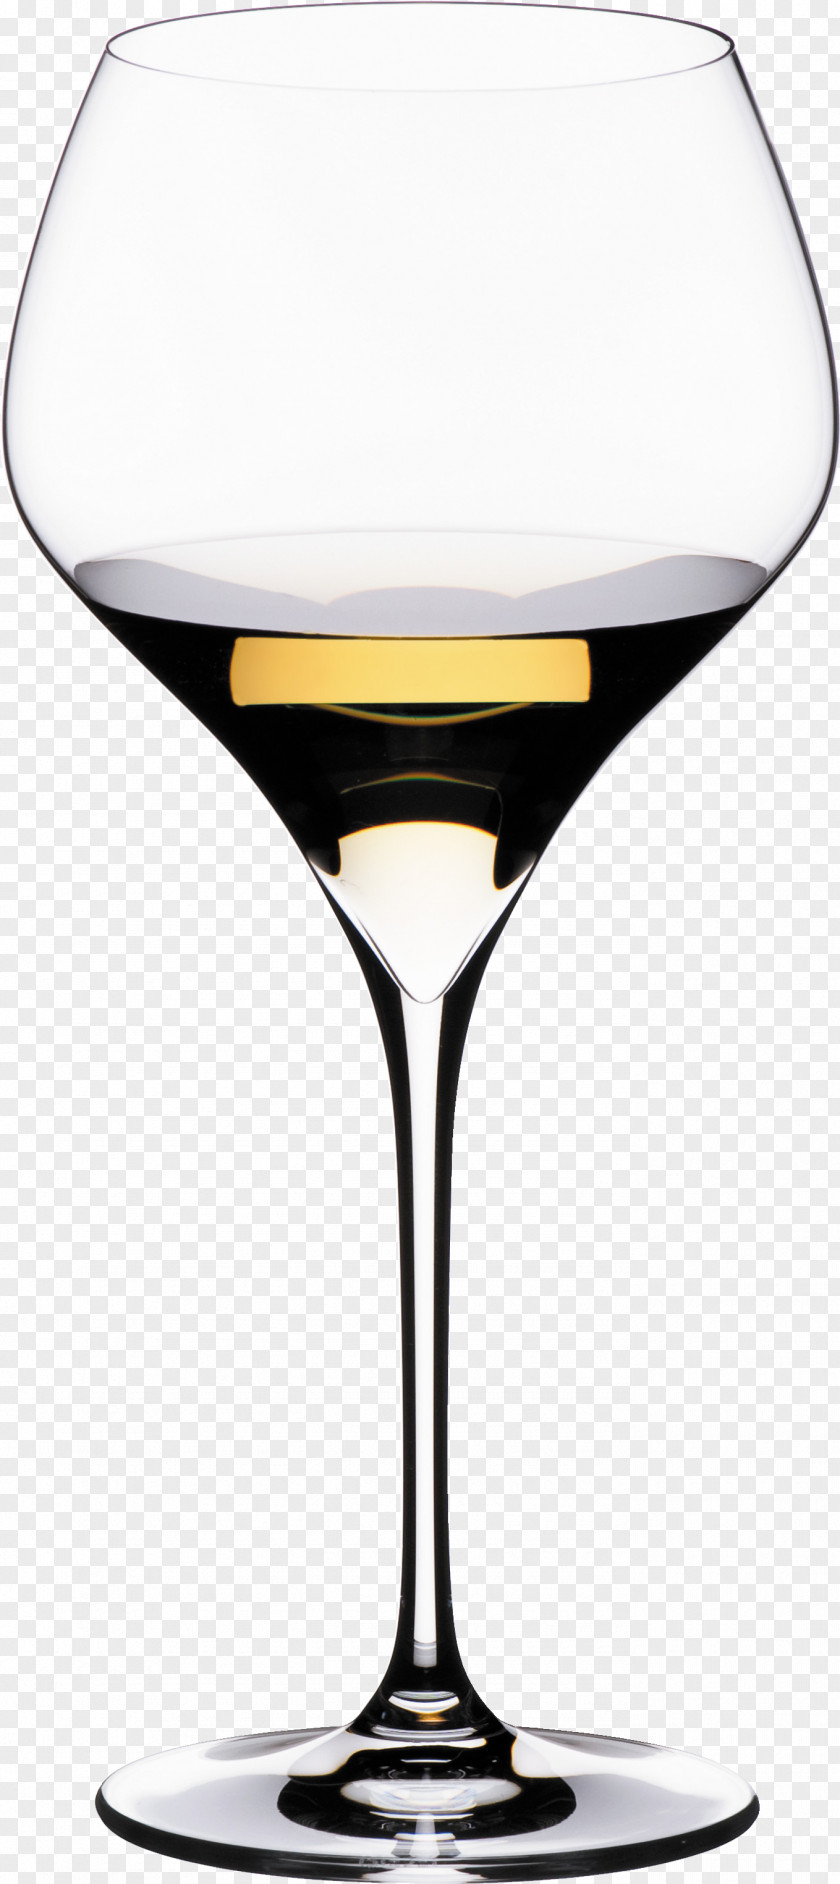 Glass Image Wine Cabernet Sauvignon Chardonnay Champagne Pinot Noir PNG